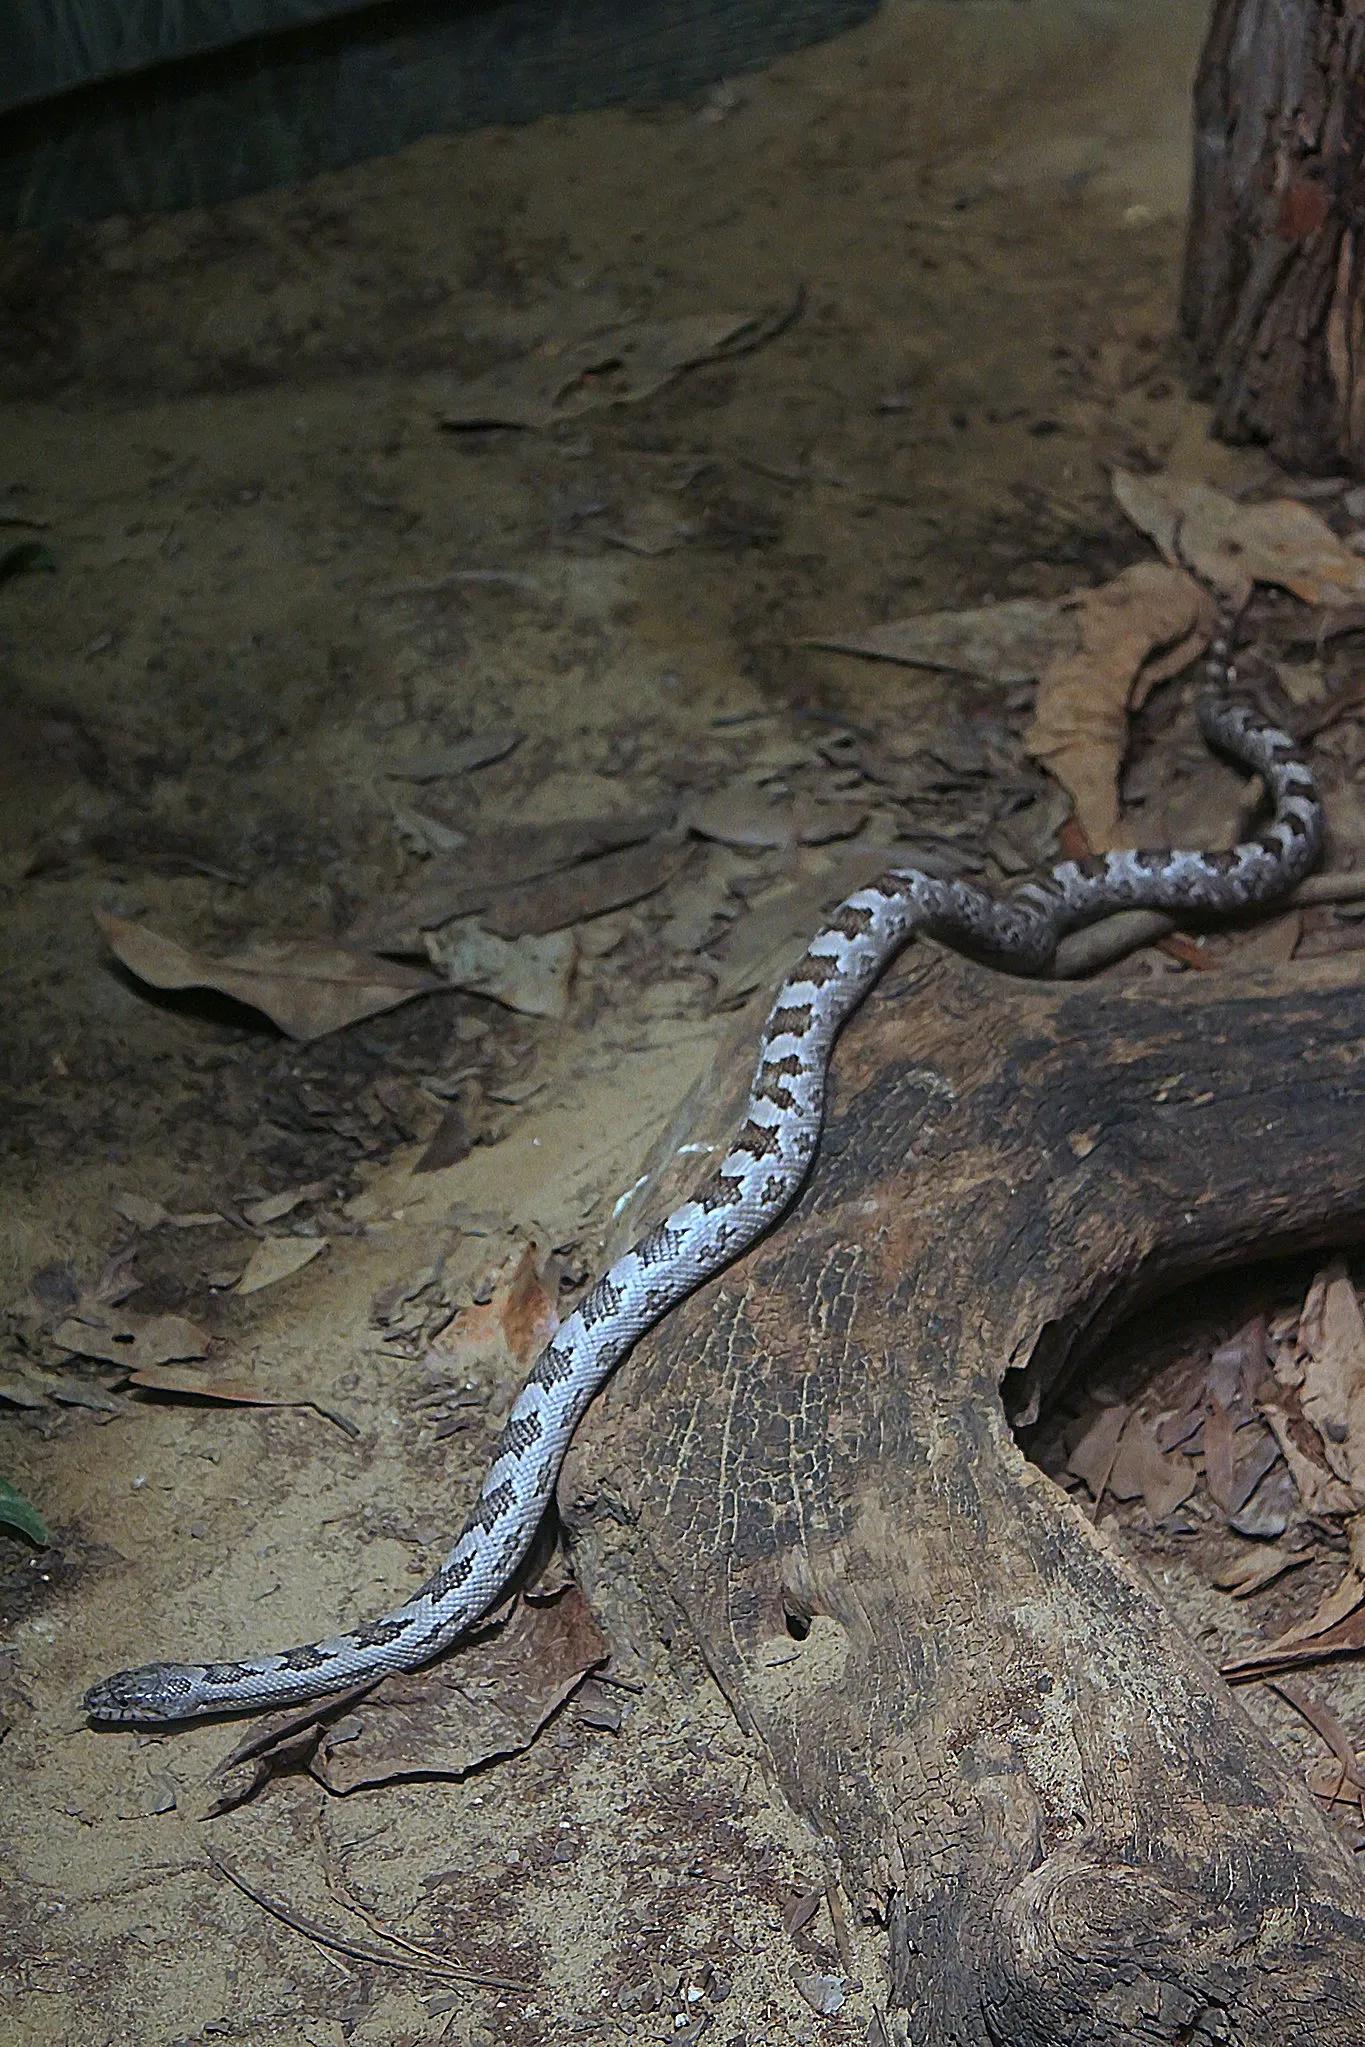 Southern Rat Snake Facts